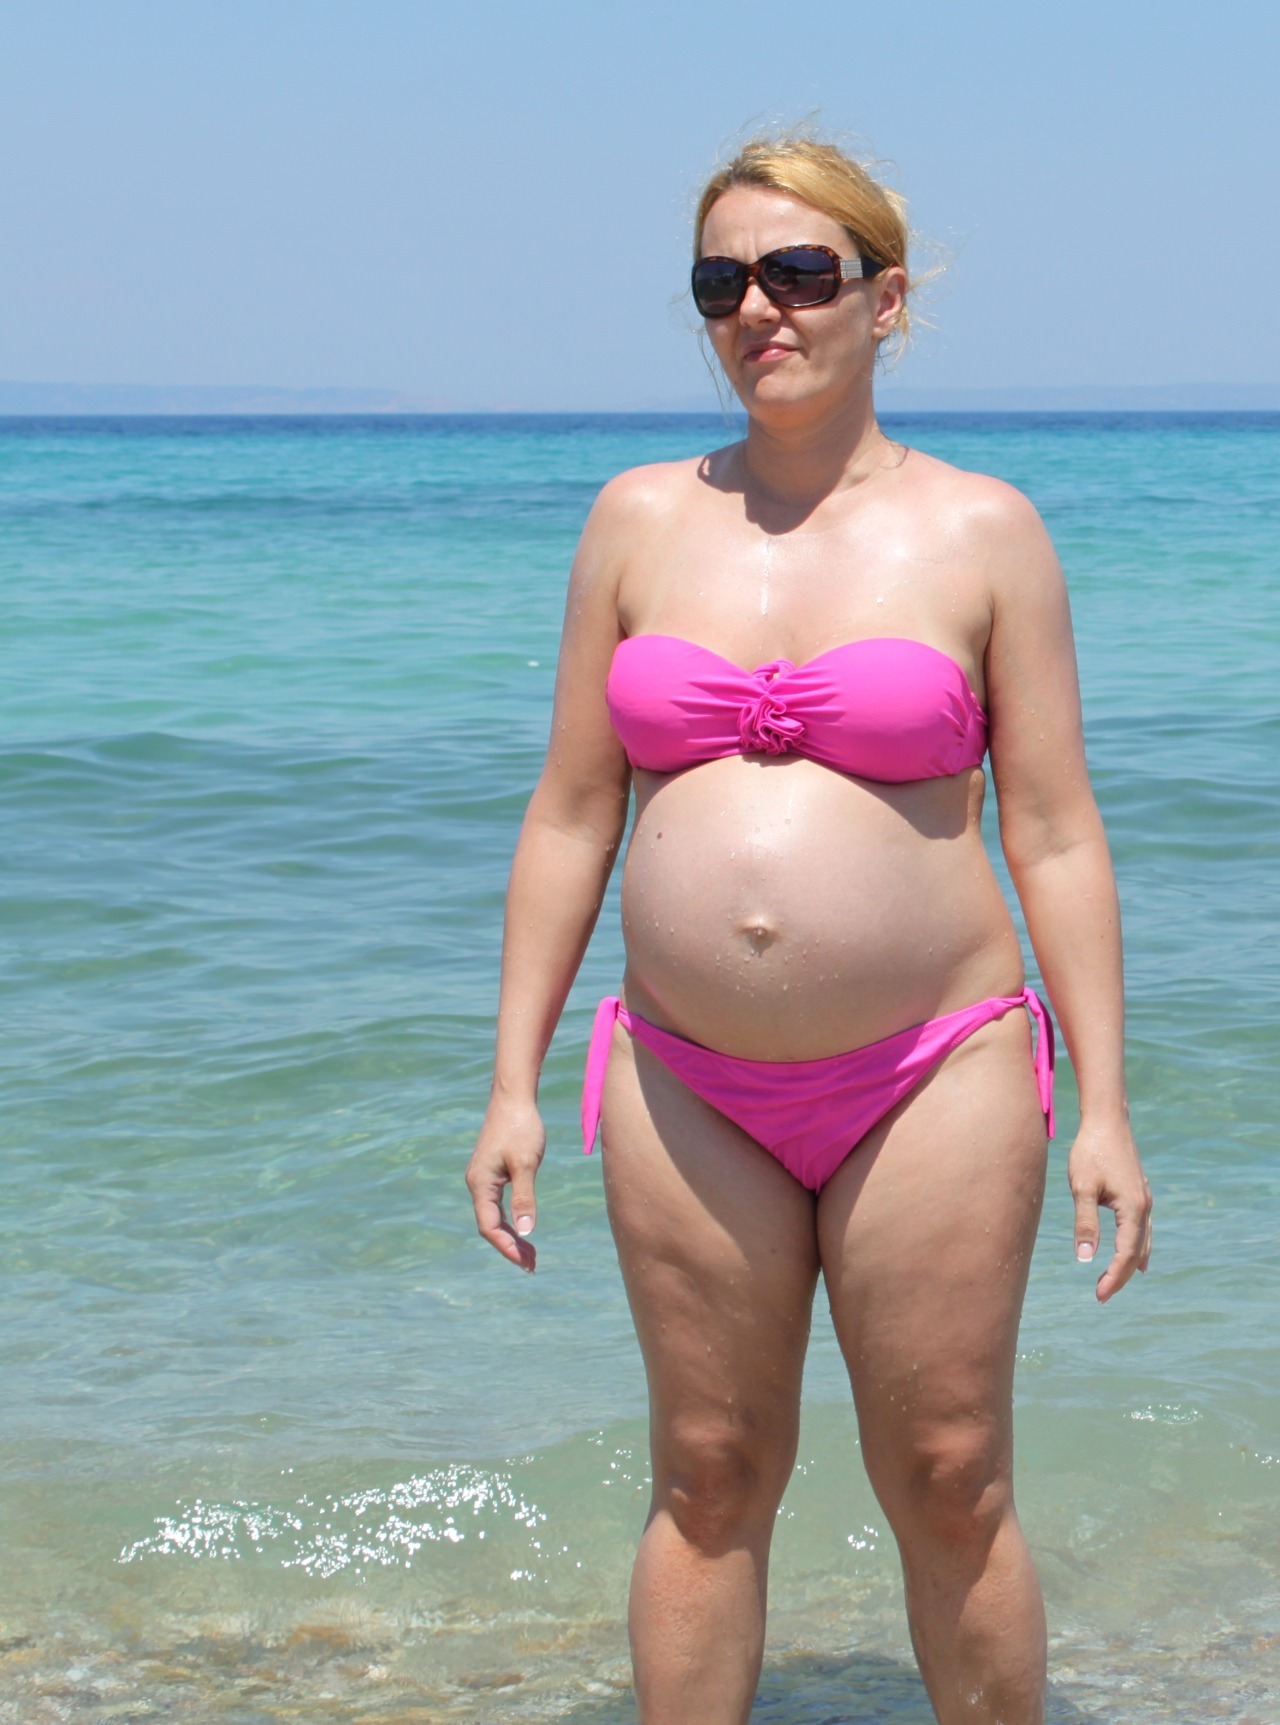 Pregnant in a pink bikini Pic - EPORNER